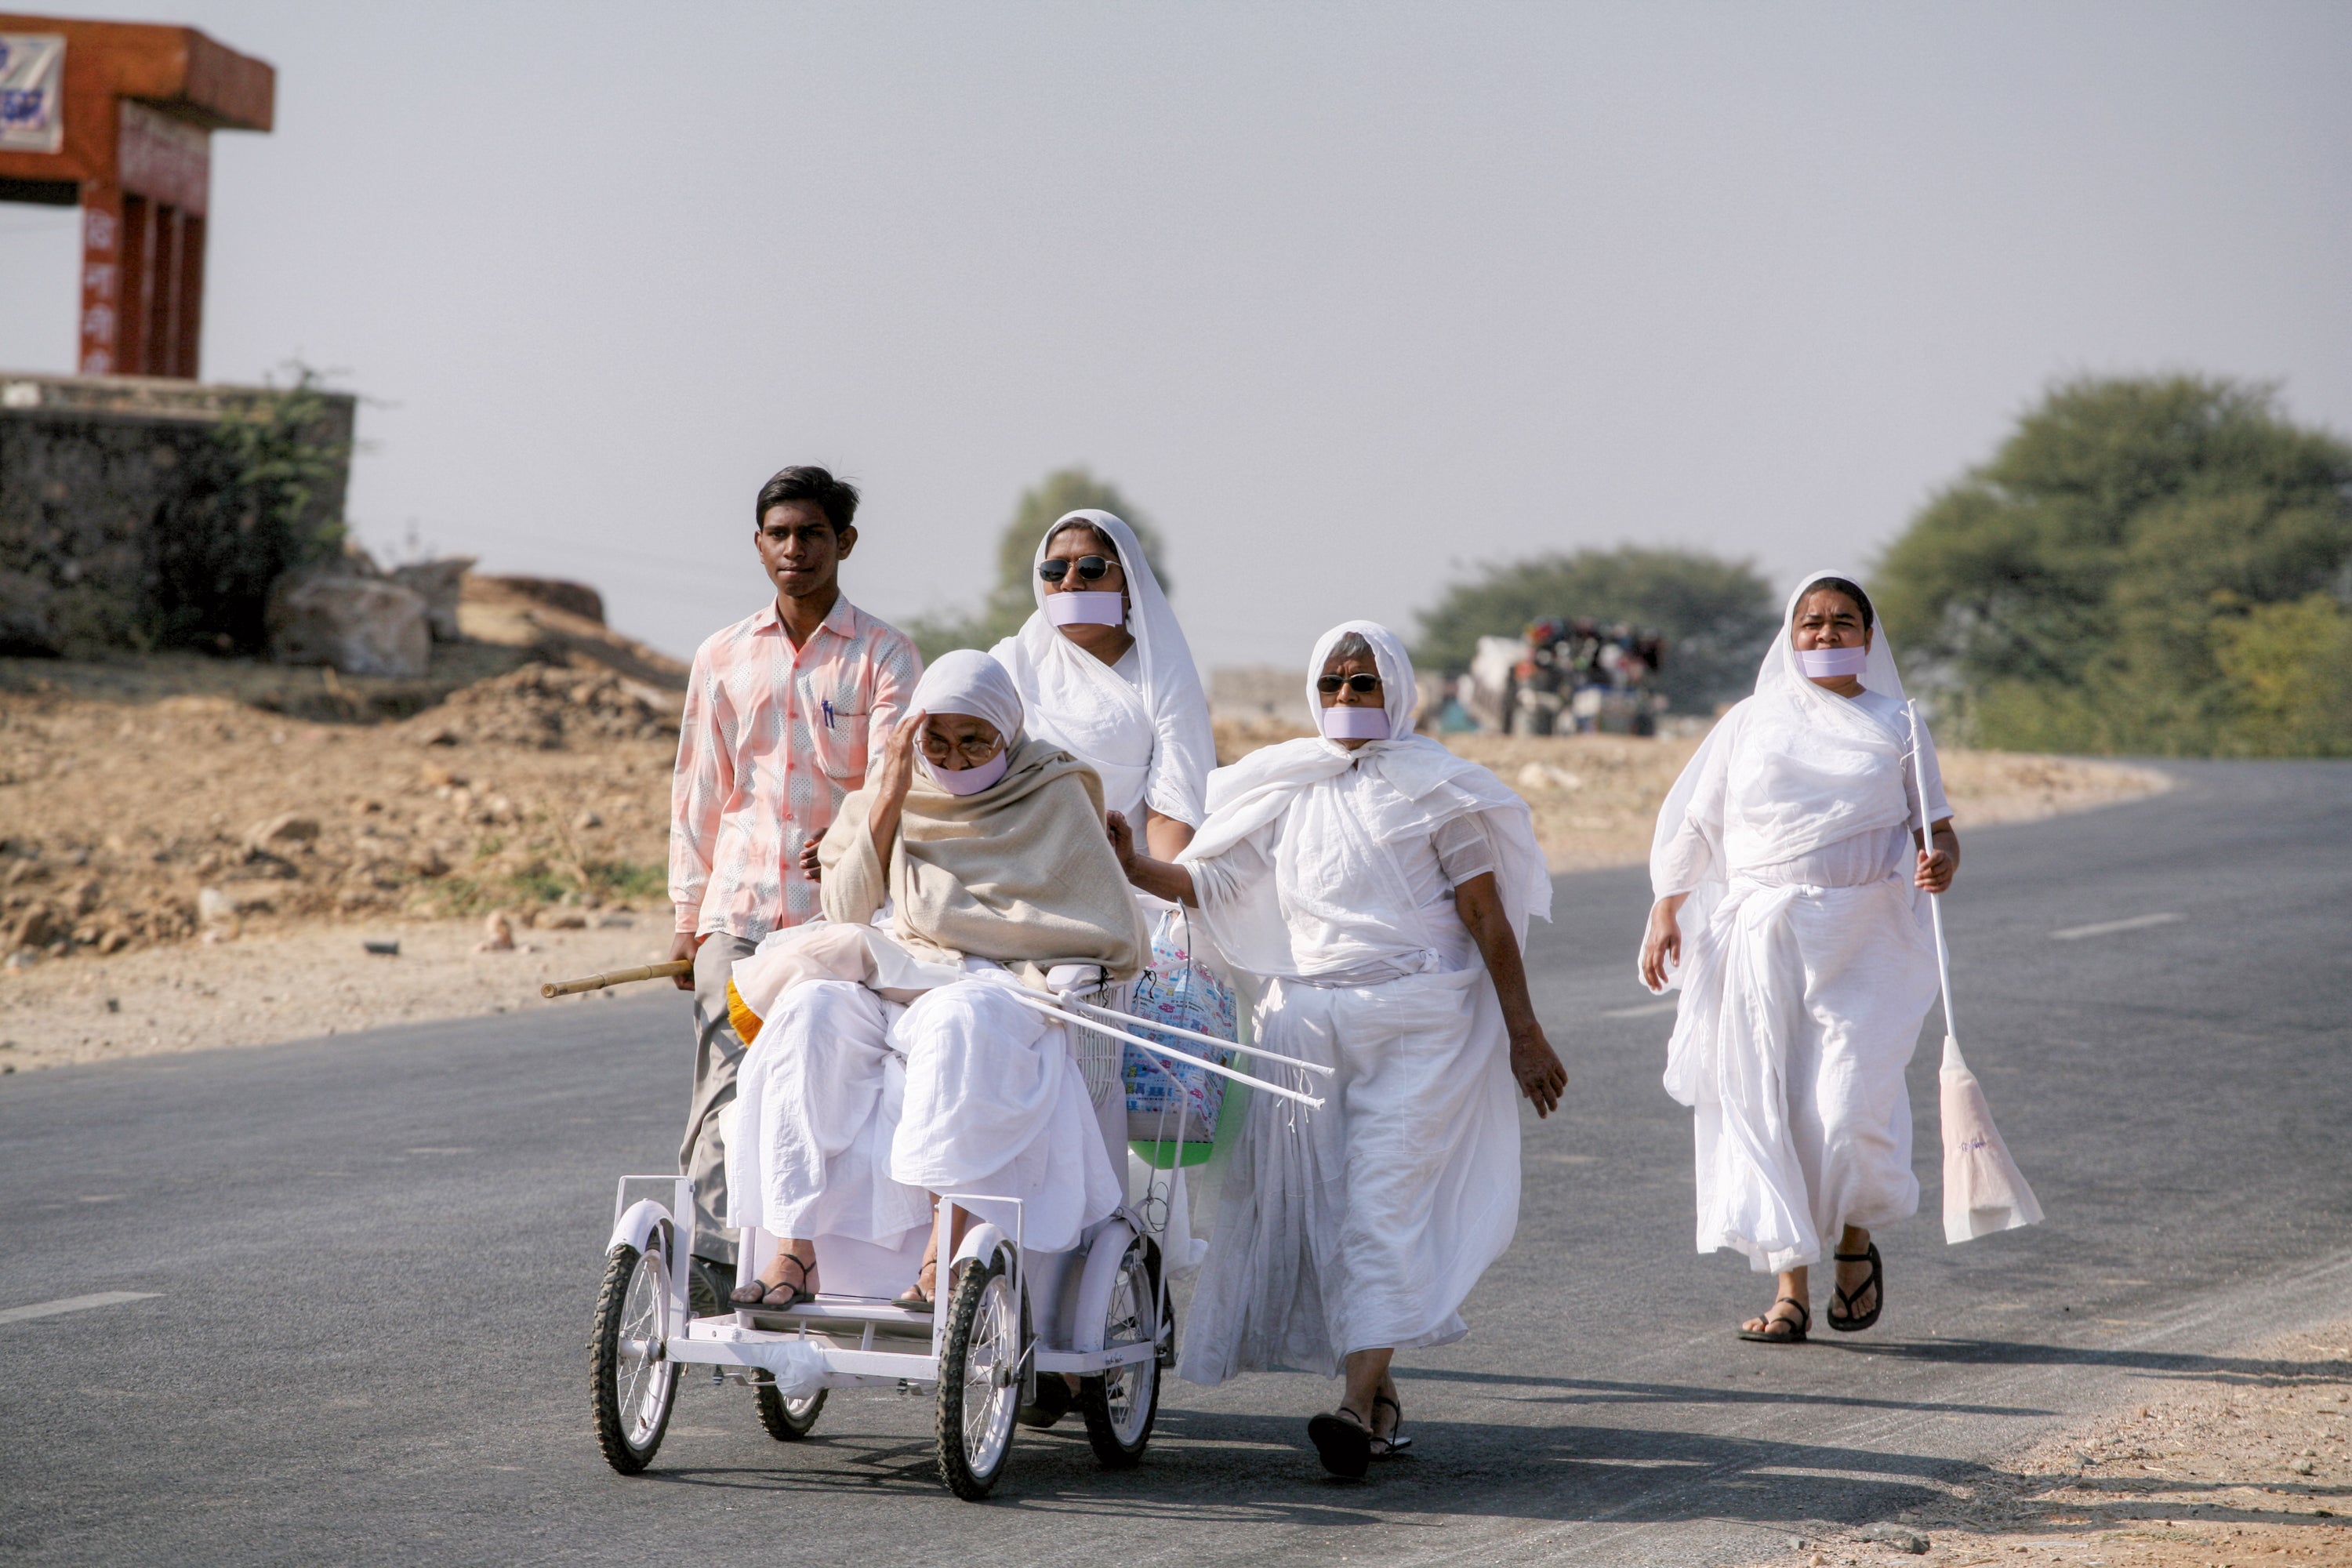 Jains on pilgrimage in Rajasthan #3/8